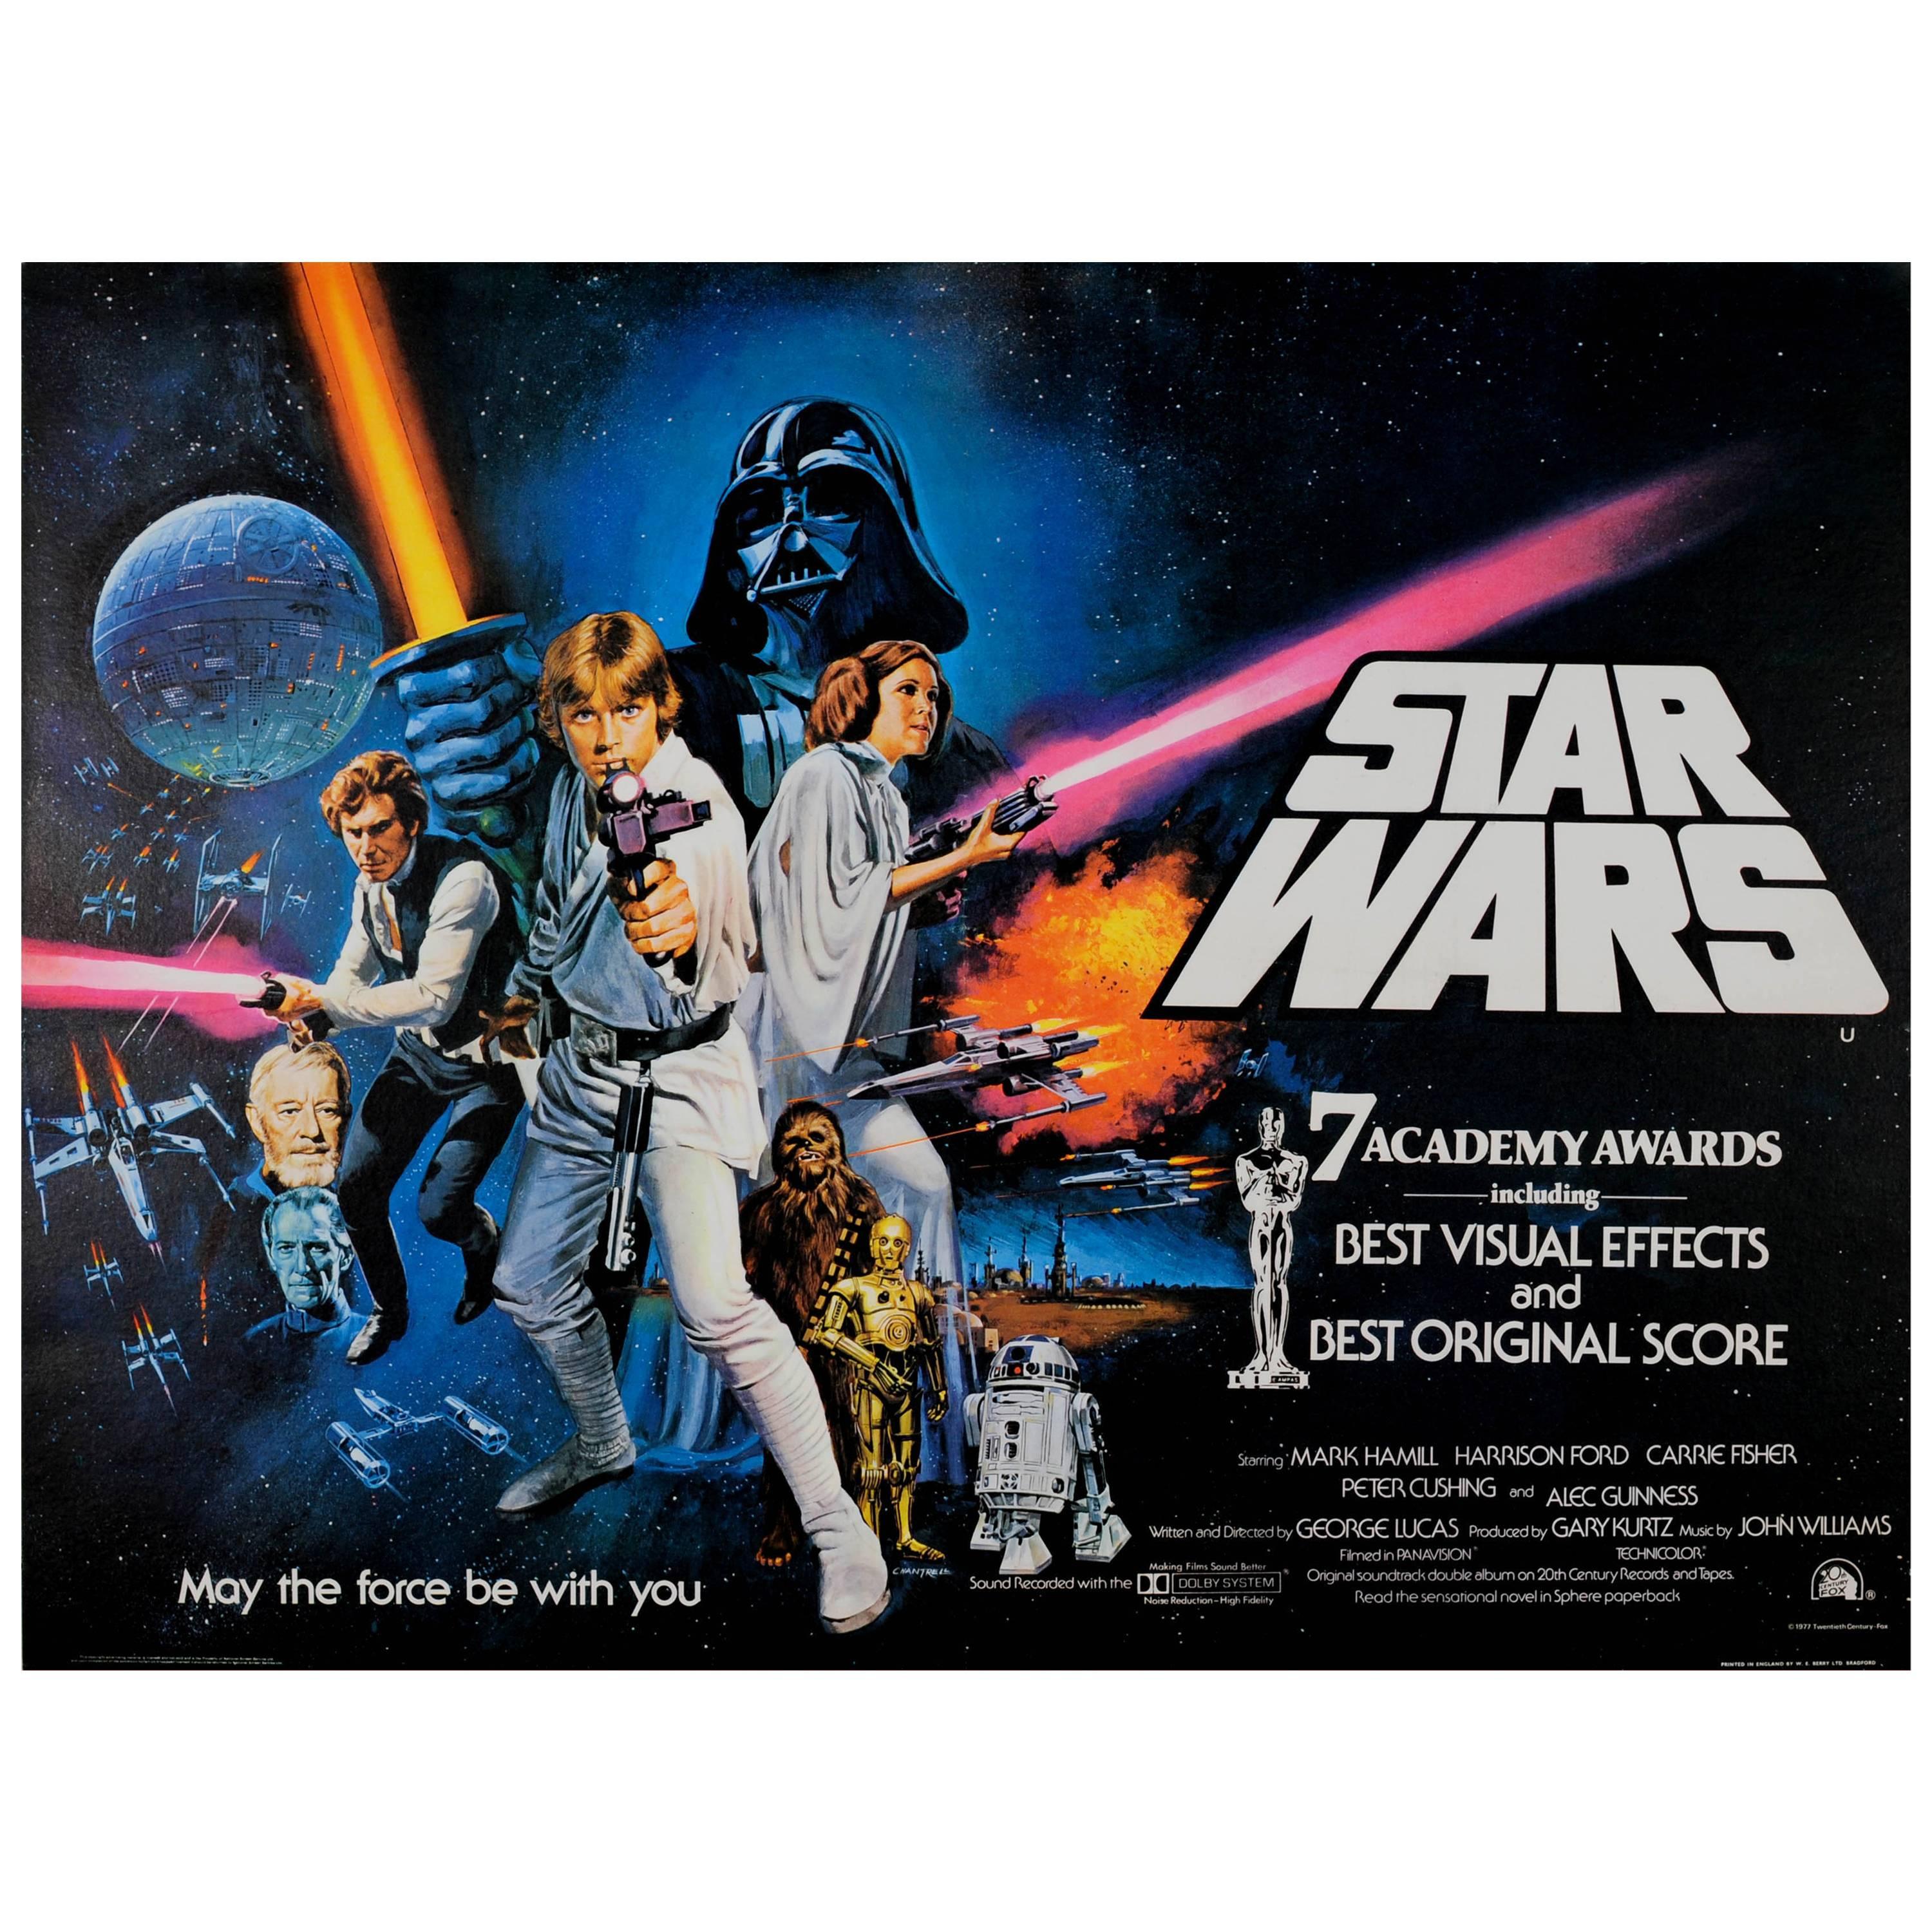 Original Vintage British Quad Sci-Fi Movie Poster for Star Wars 7 Academy Awards